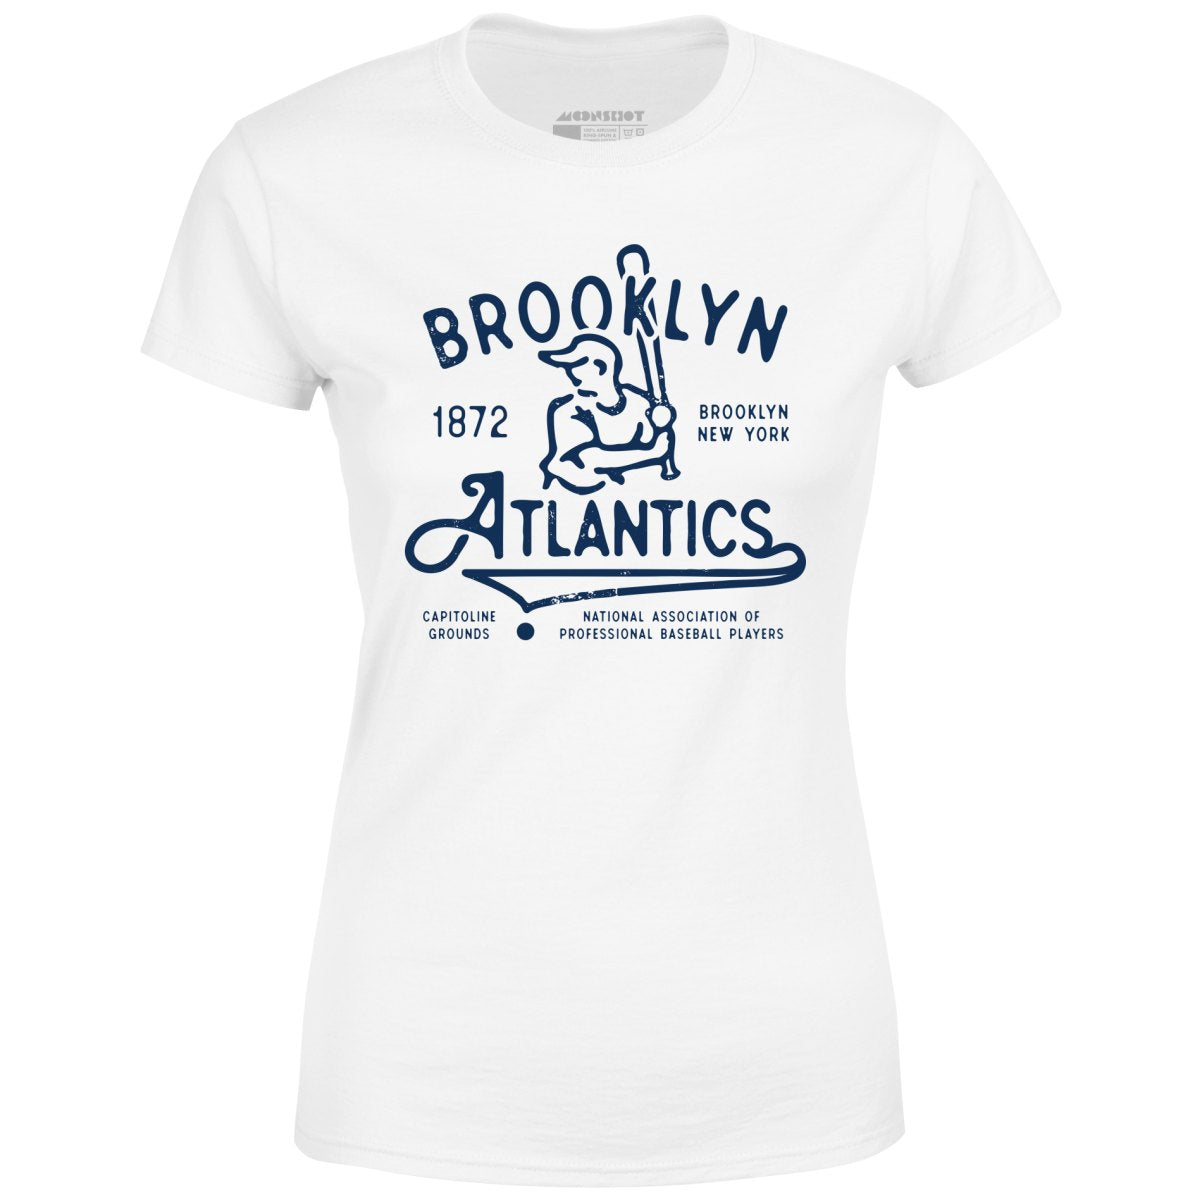 Brooklyn Atlantics - New York - Vintage Defunct Baseball Teams - Women's T-Shirt